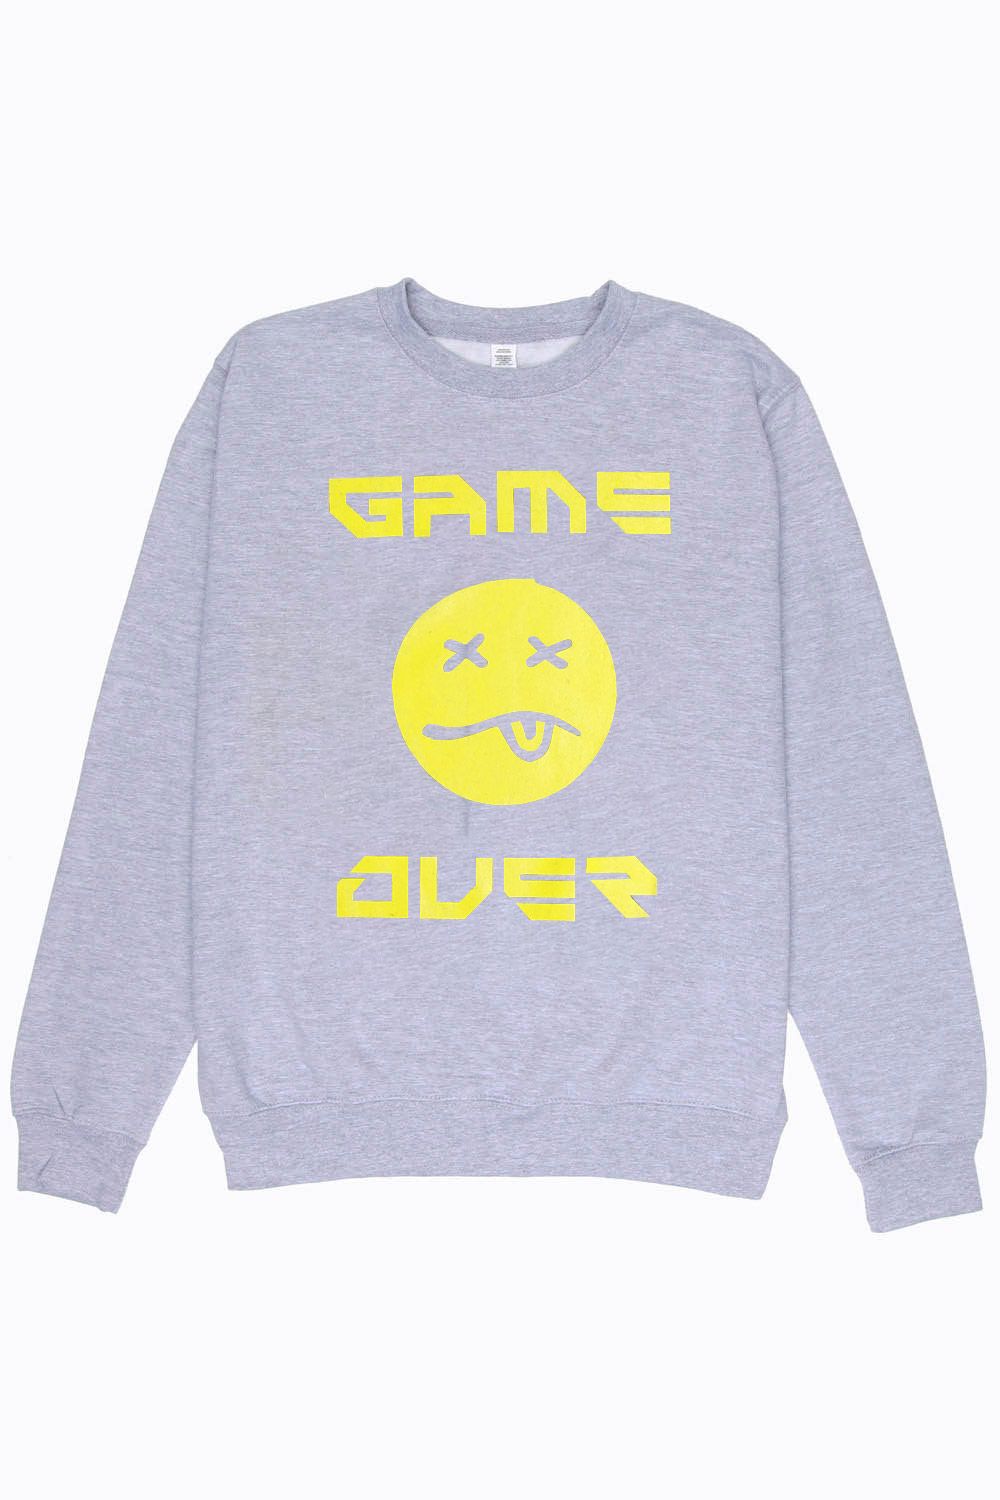 Game Over Slogan Basic Crew Neck Sweatshirt Pack of 6